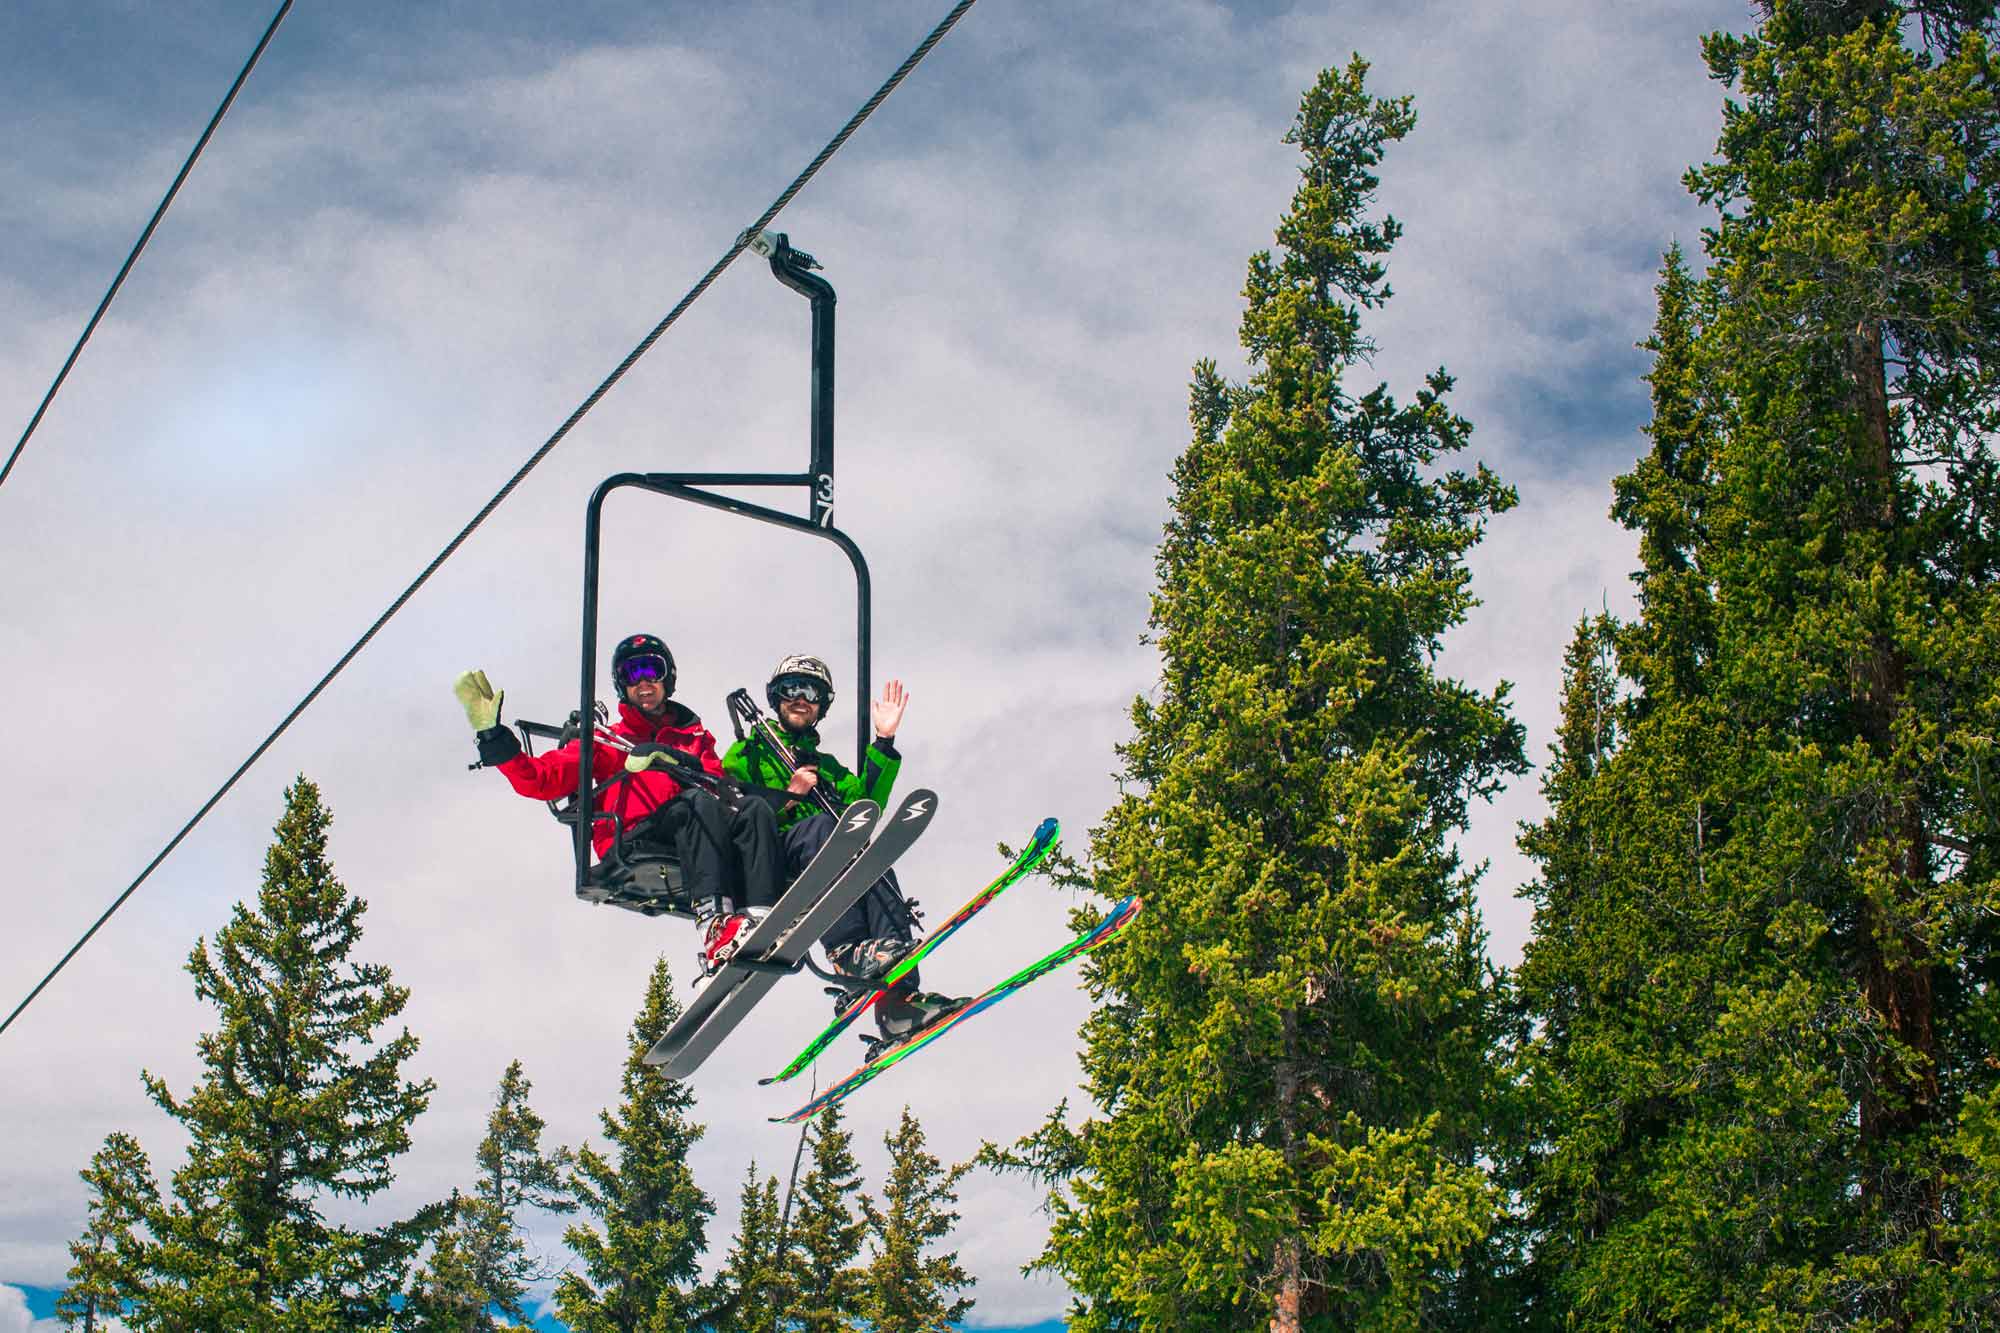 Weekday ski discounts at Ski Cooper